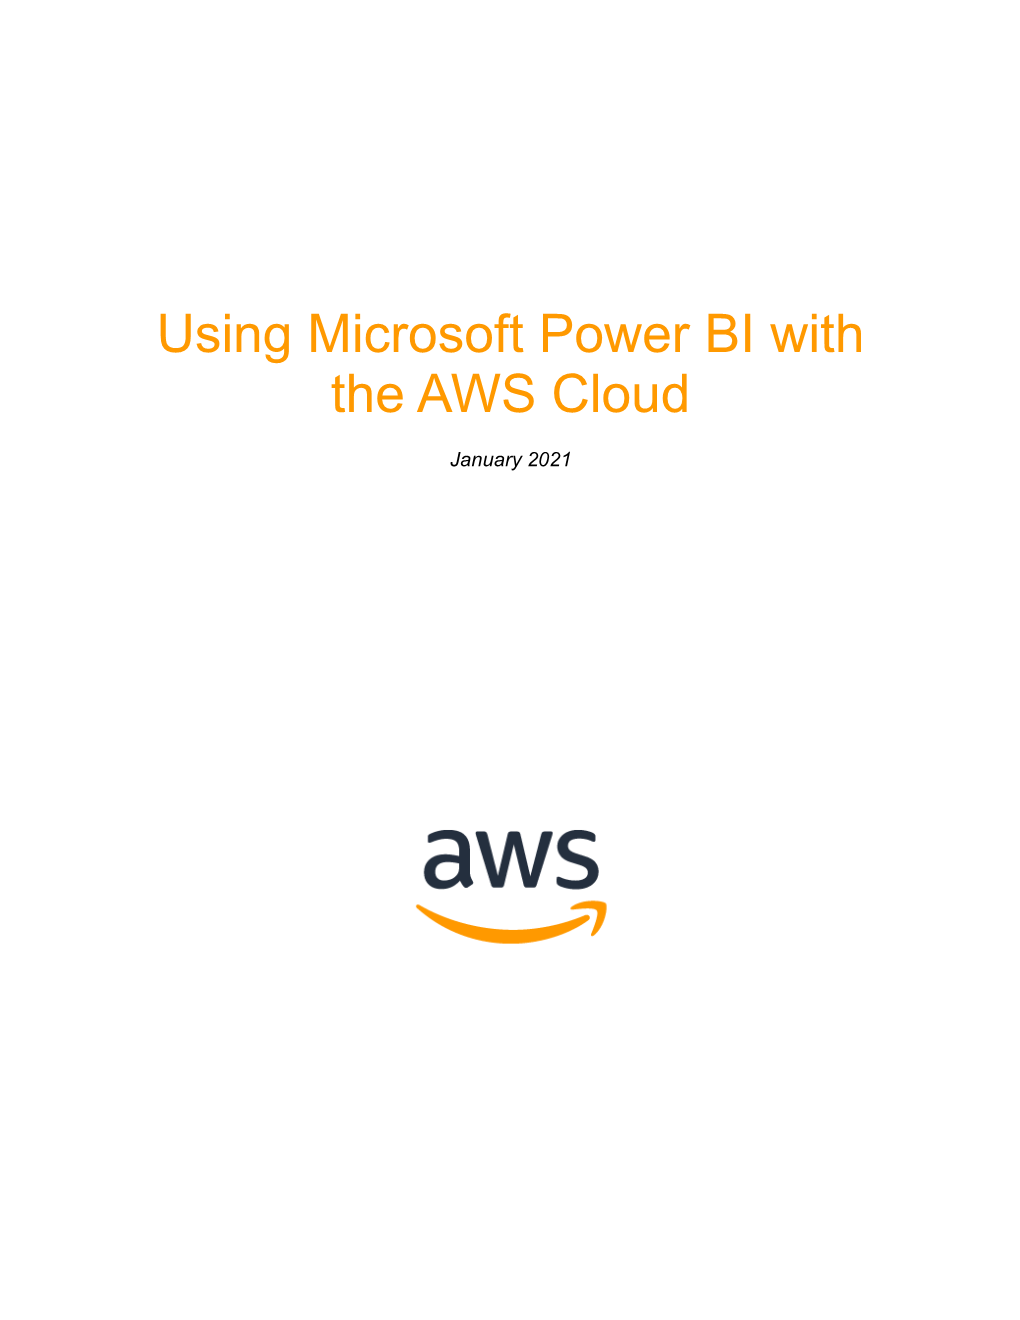 Using Microsoft Power BI Wtih the AWS Cloud